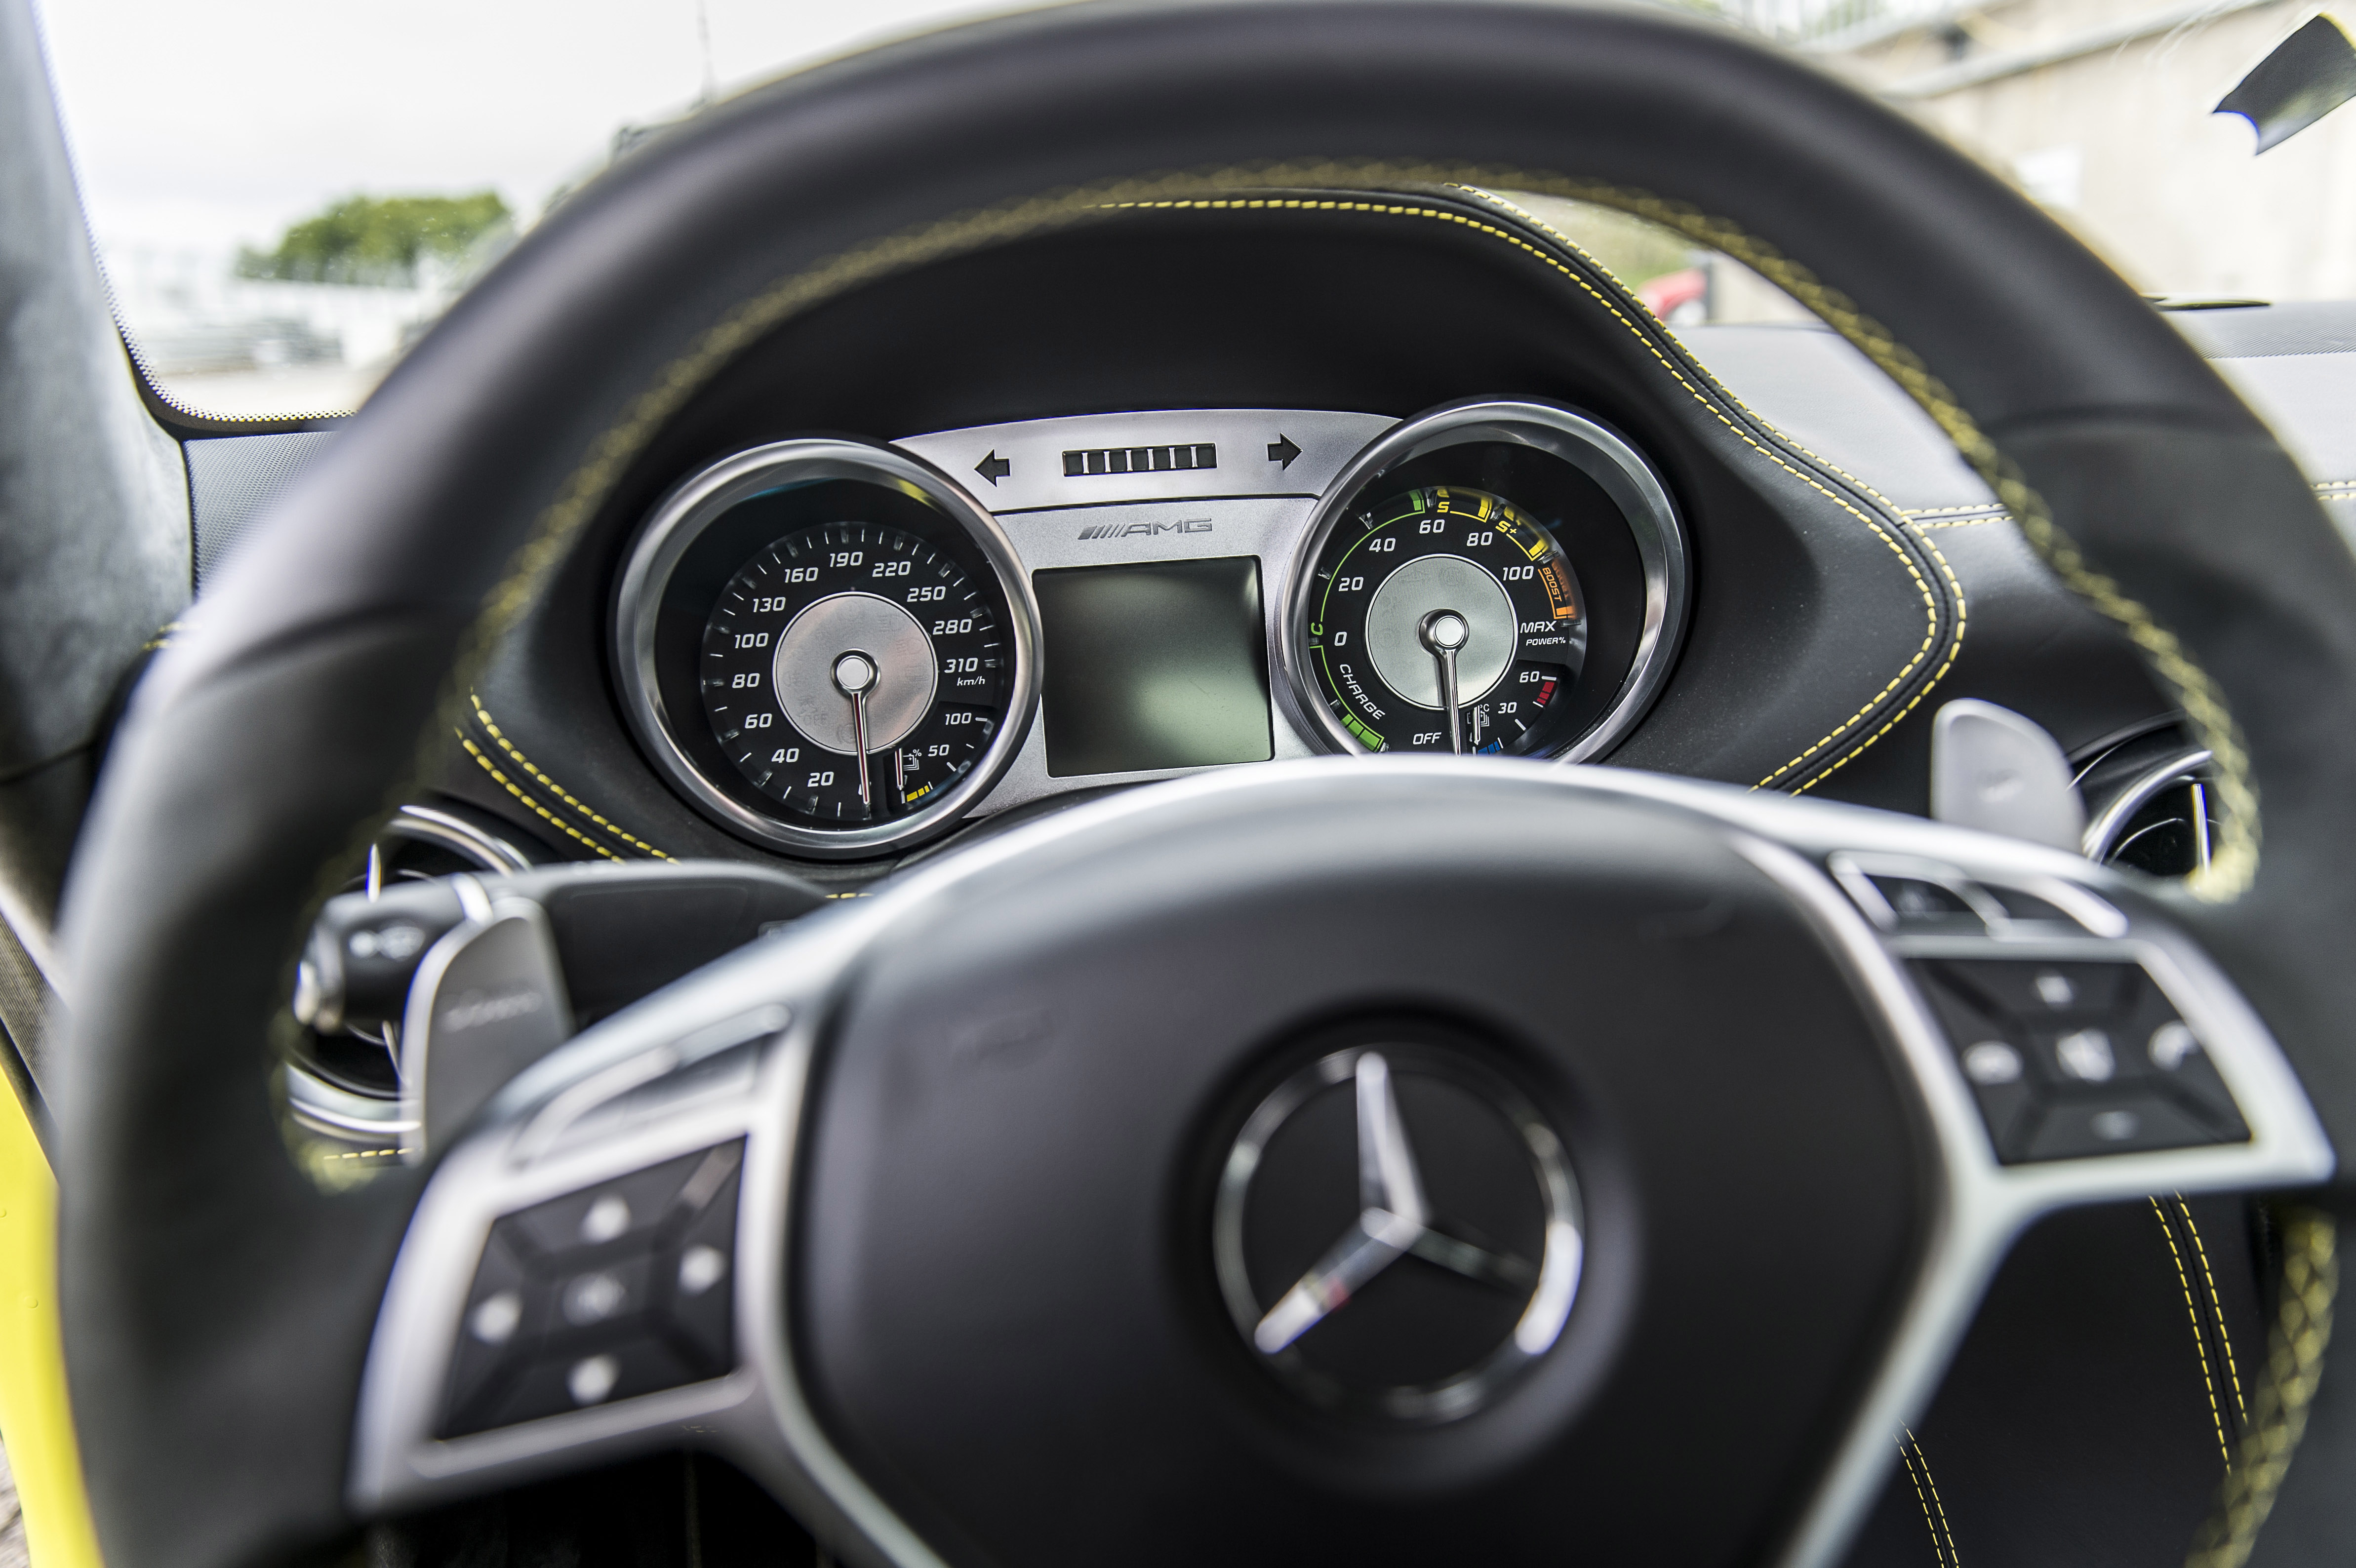 Mercedes-Benz SLS AMG Coupe Electric Drive Production Car